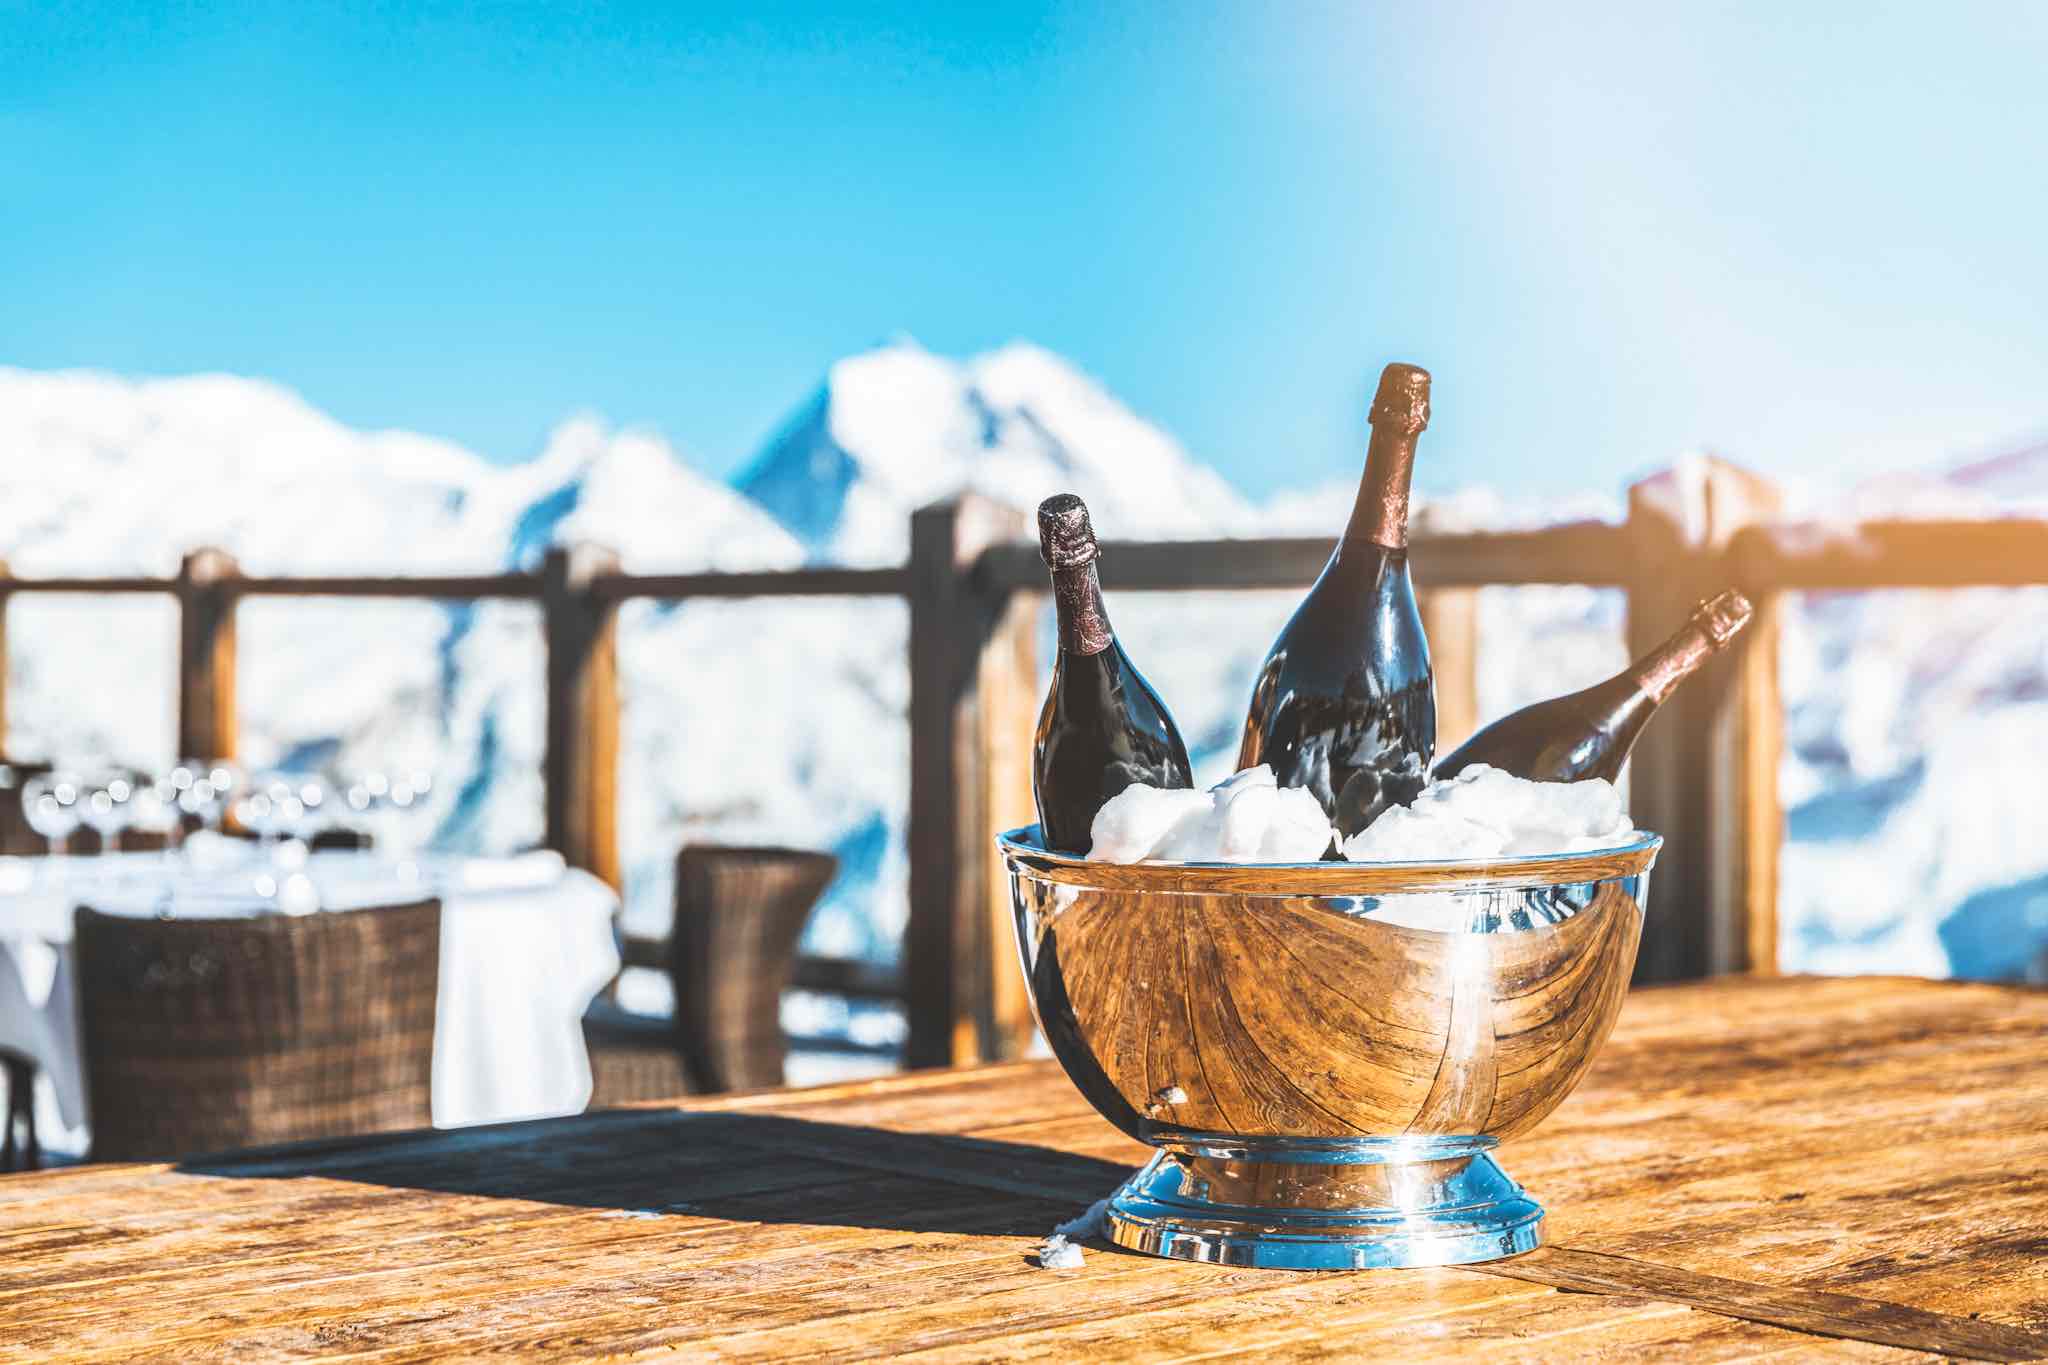 12 Luxury Ski Resorts in Europe For An Exclusive Winter Getaway